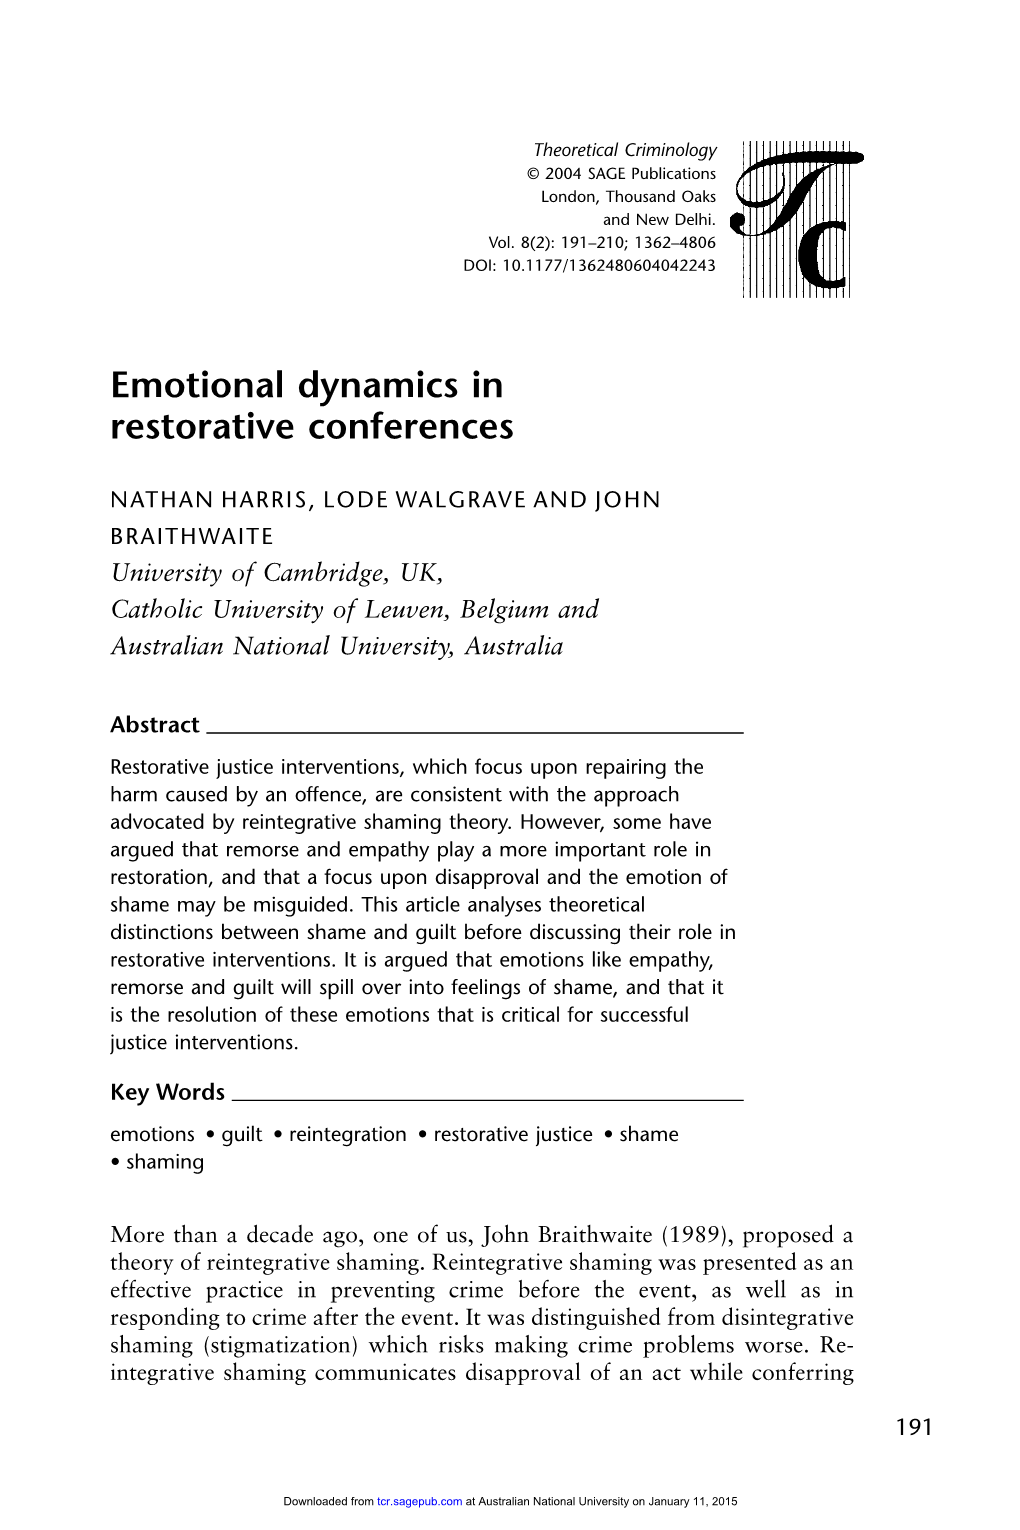 Emotional Dynamics in Restorative Conferences